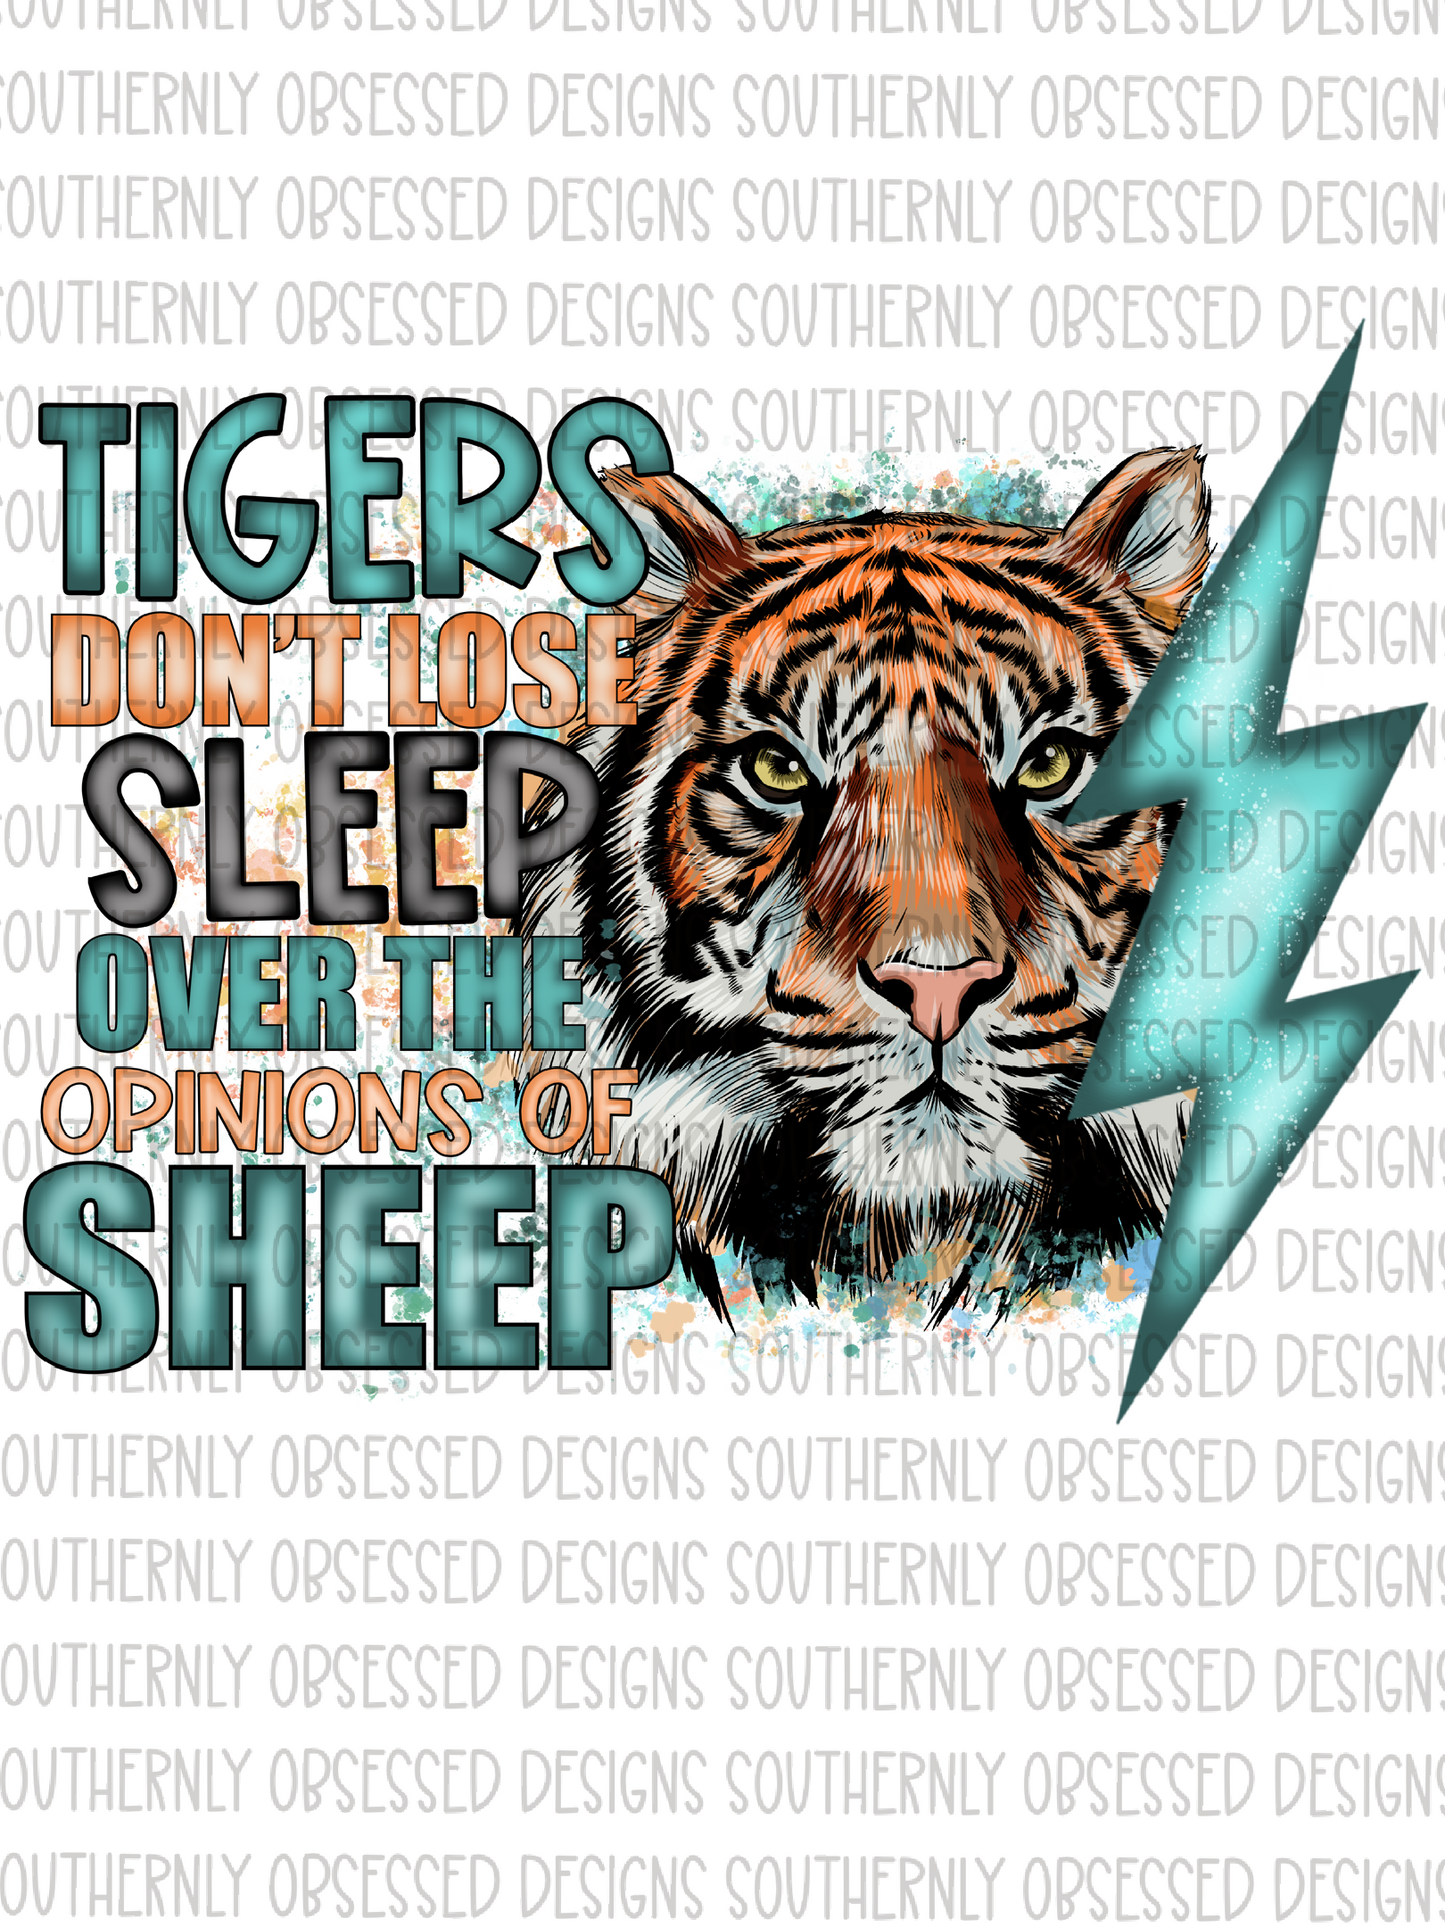 Tigers Don’t Lose Sleep